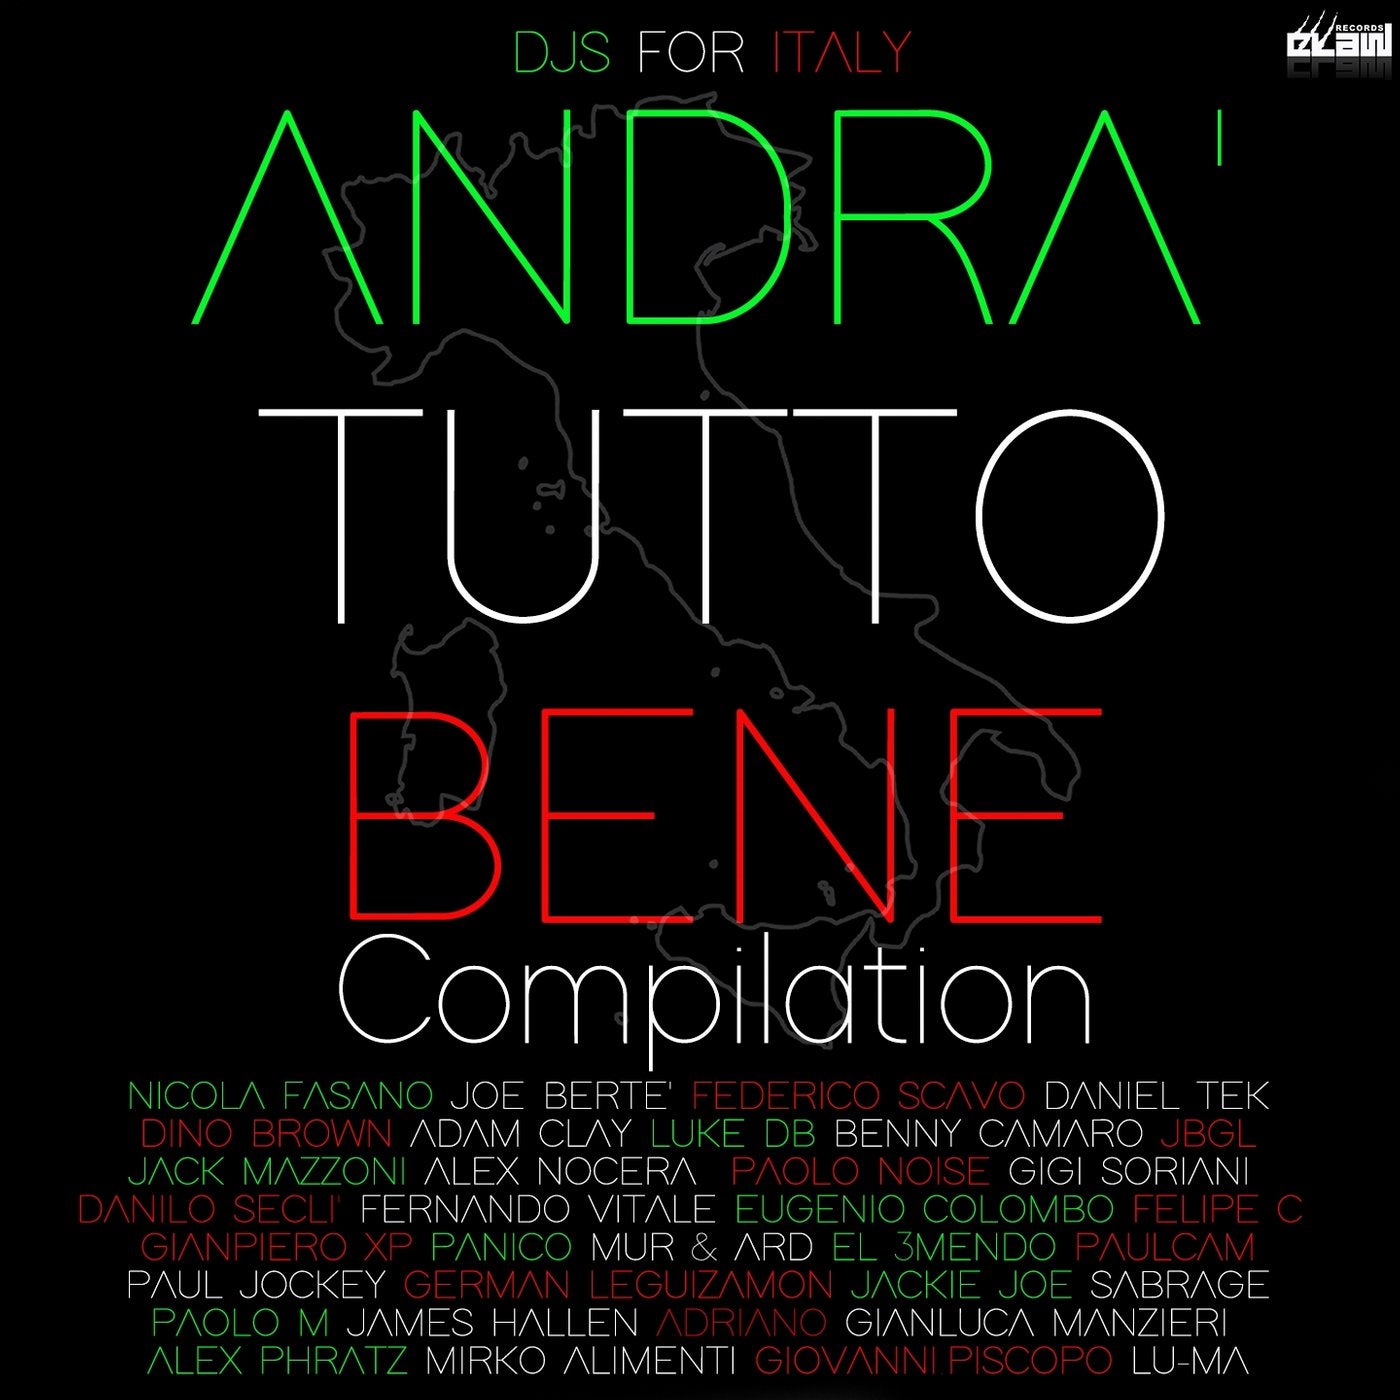 Andra' Tutto Bene Compilation (Joe Berte Presents: DJS for Italy)